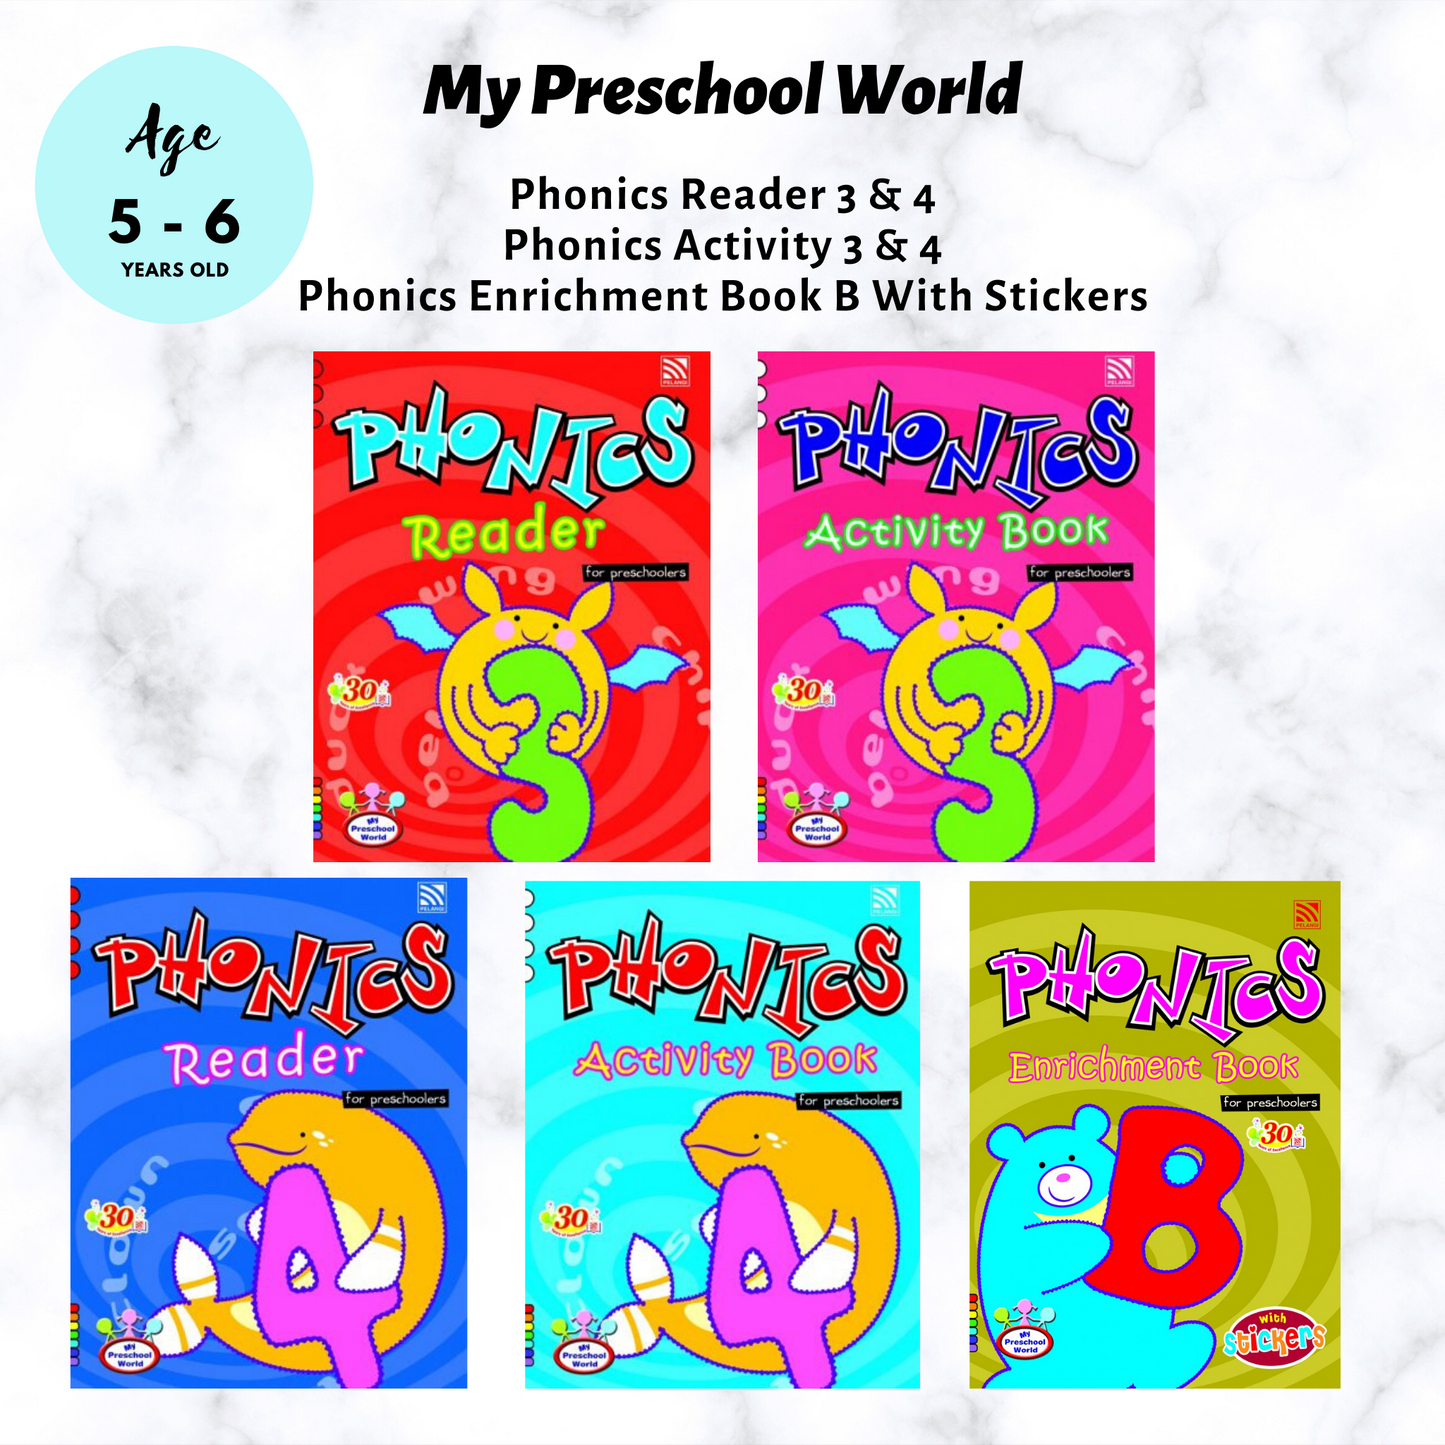 My Preschool World Phonics